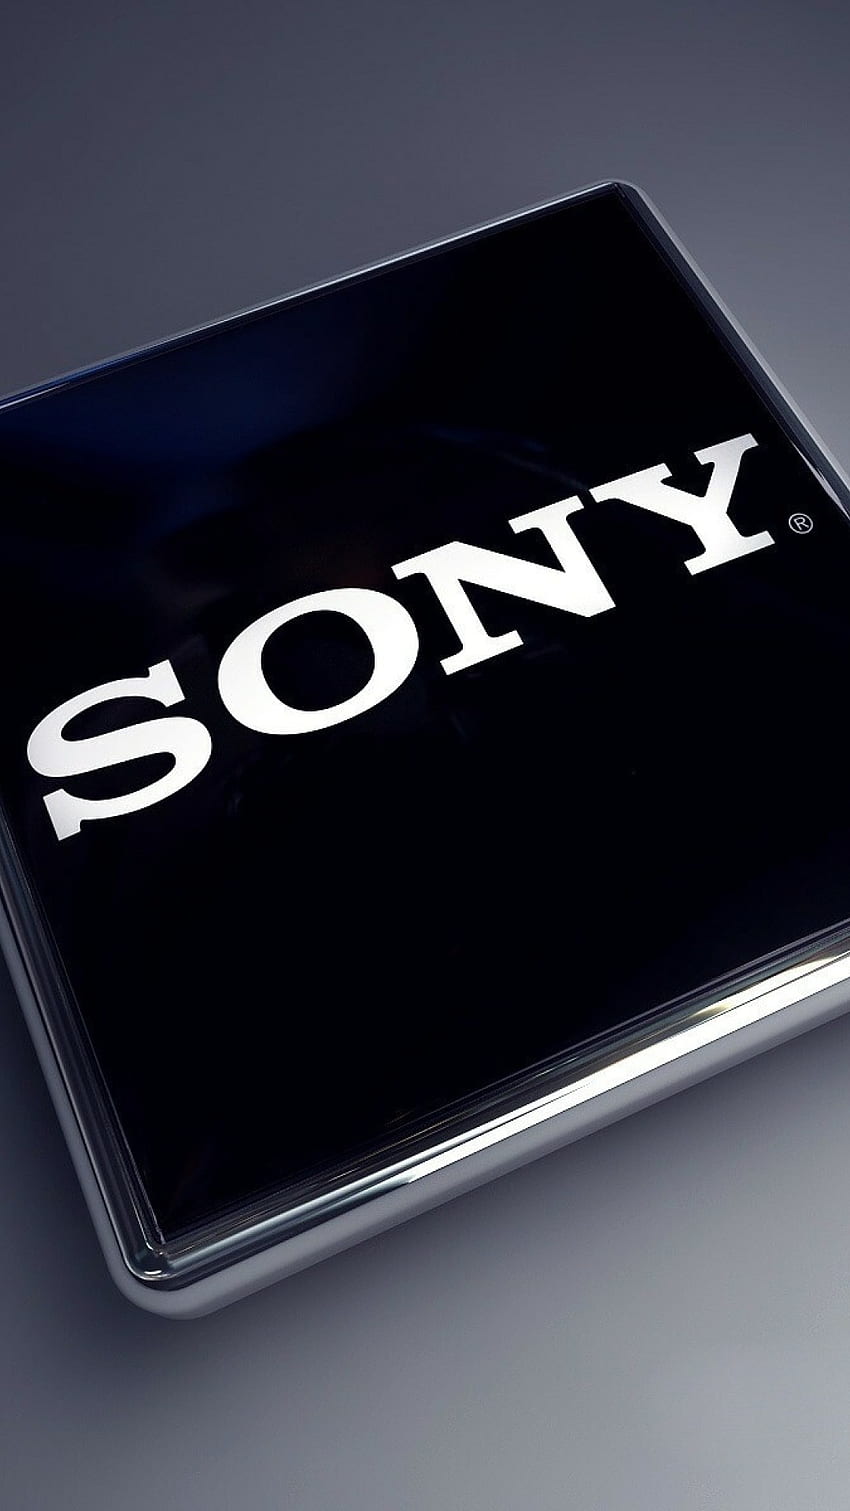 S Name, Sony HD phone wallpaper